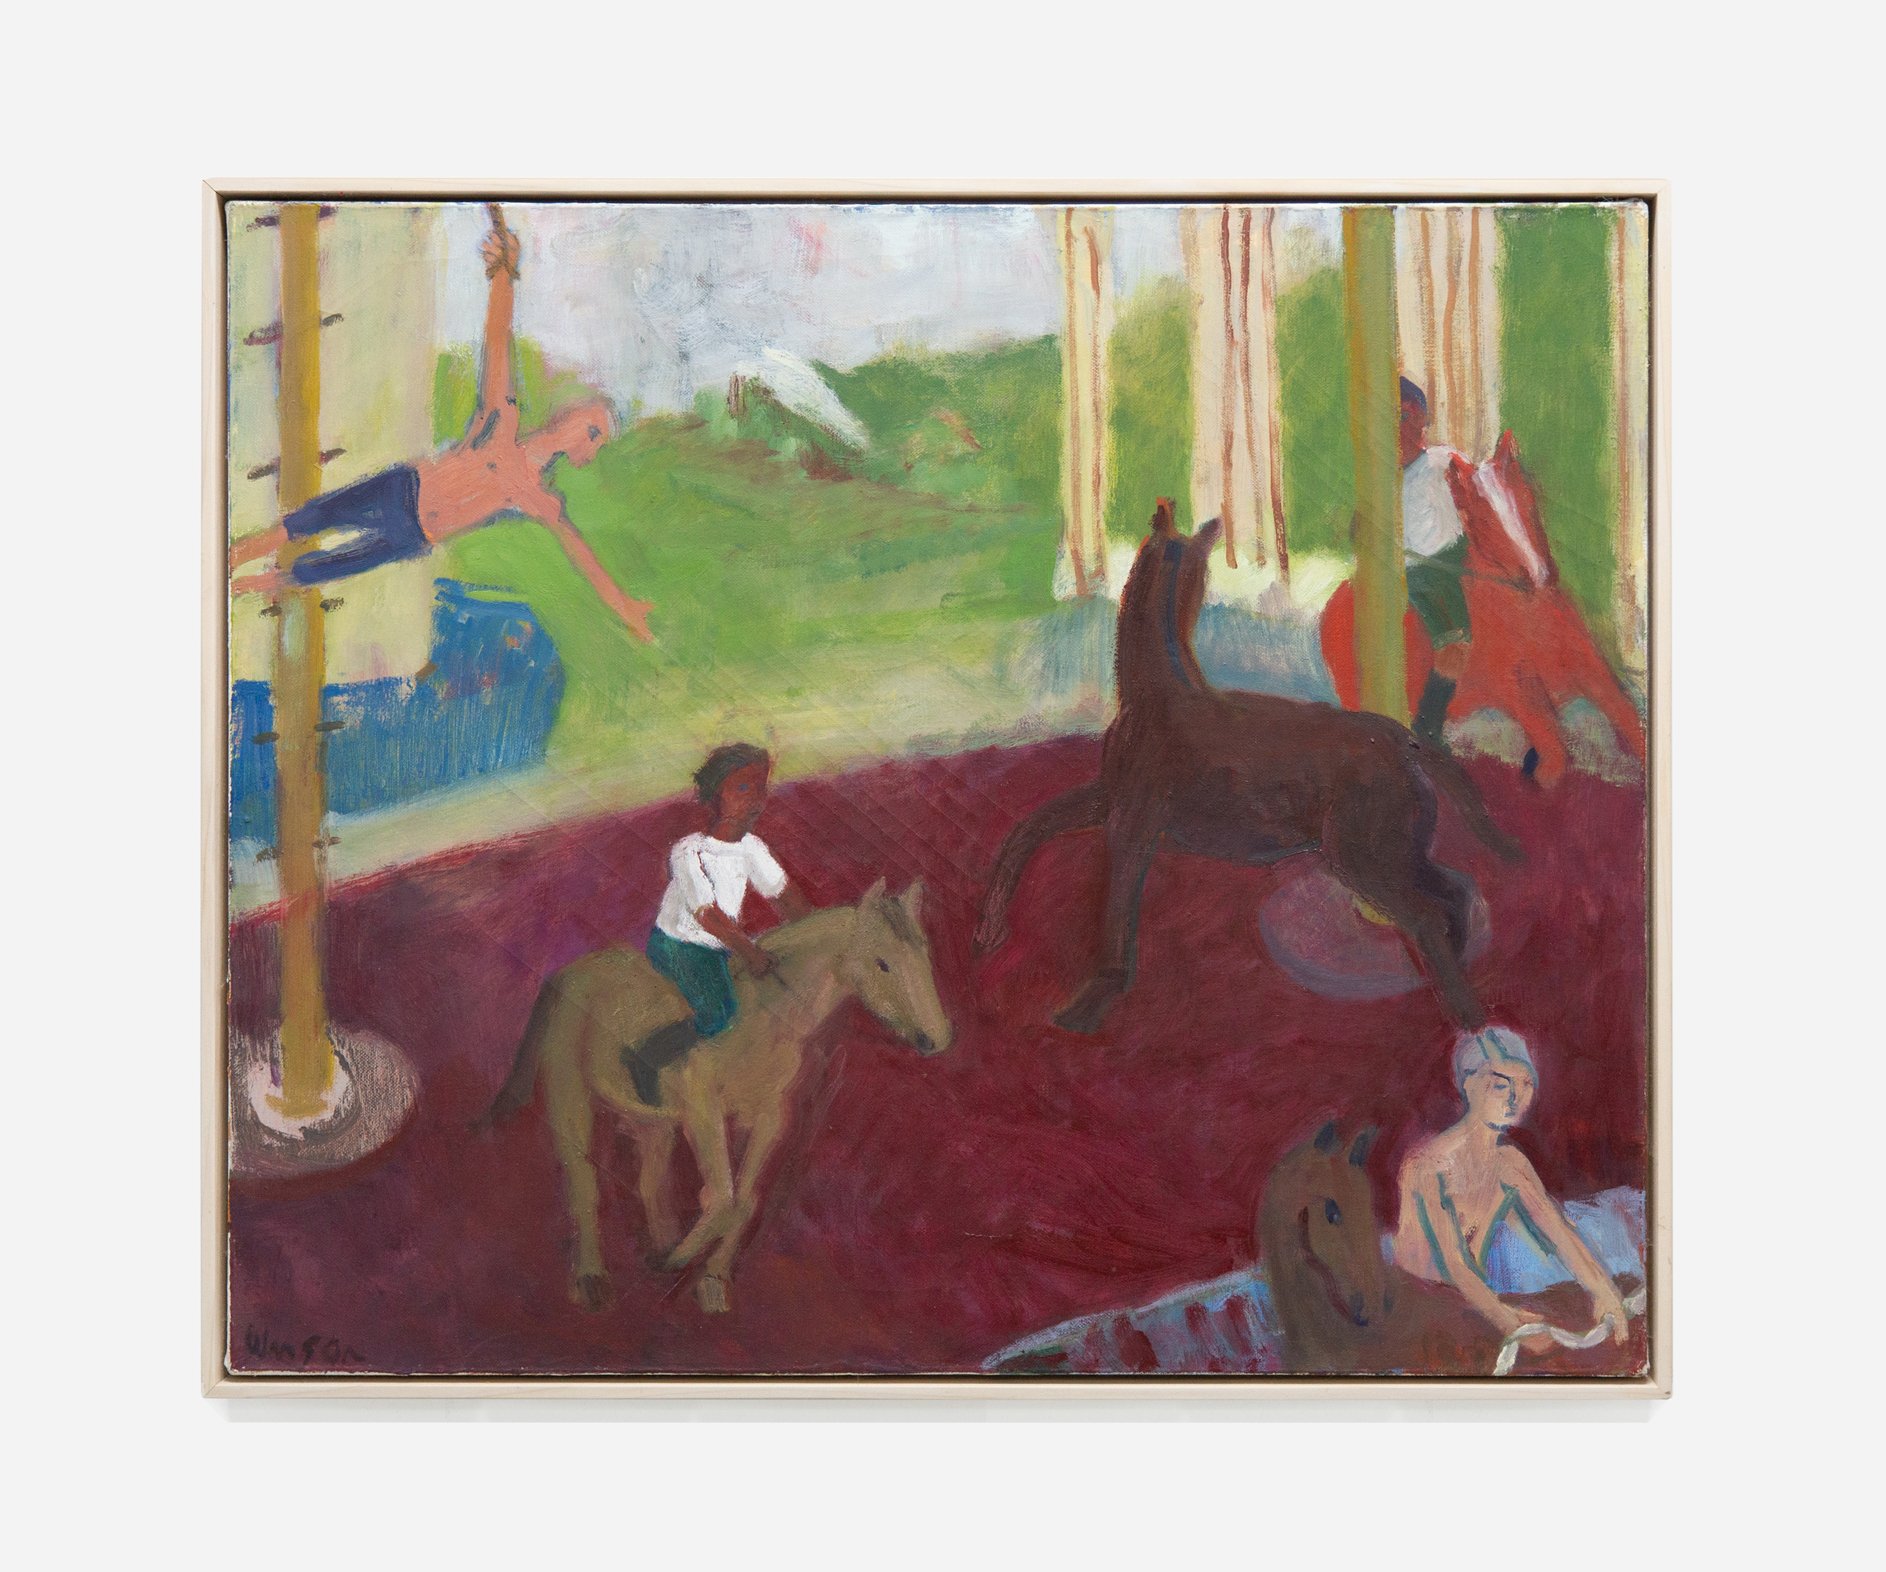   Horse Training , 2018, Oil on canvas, 24 x 20”       